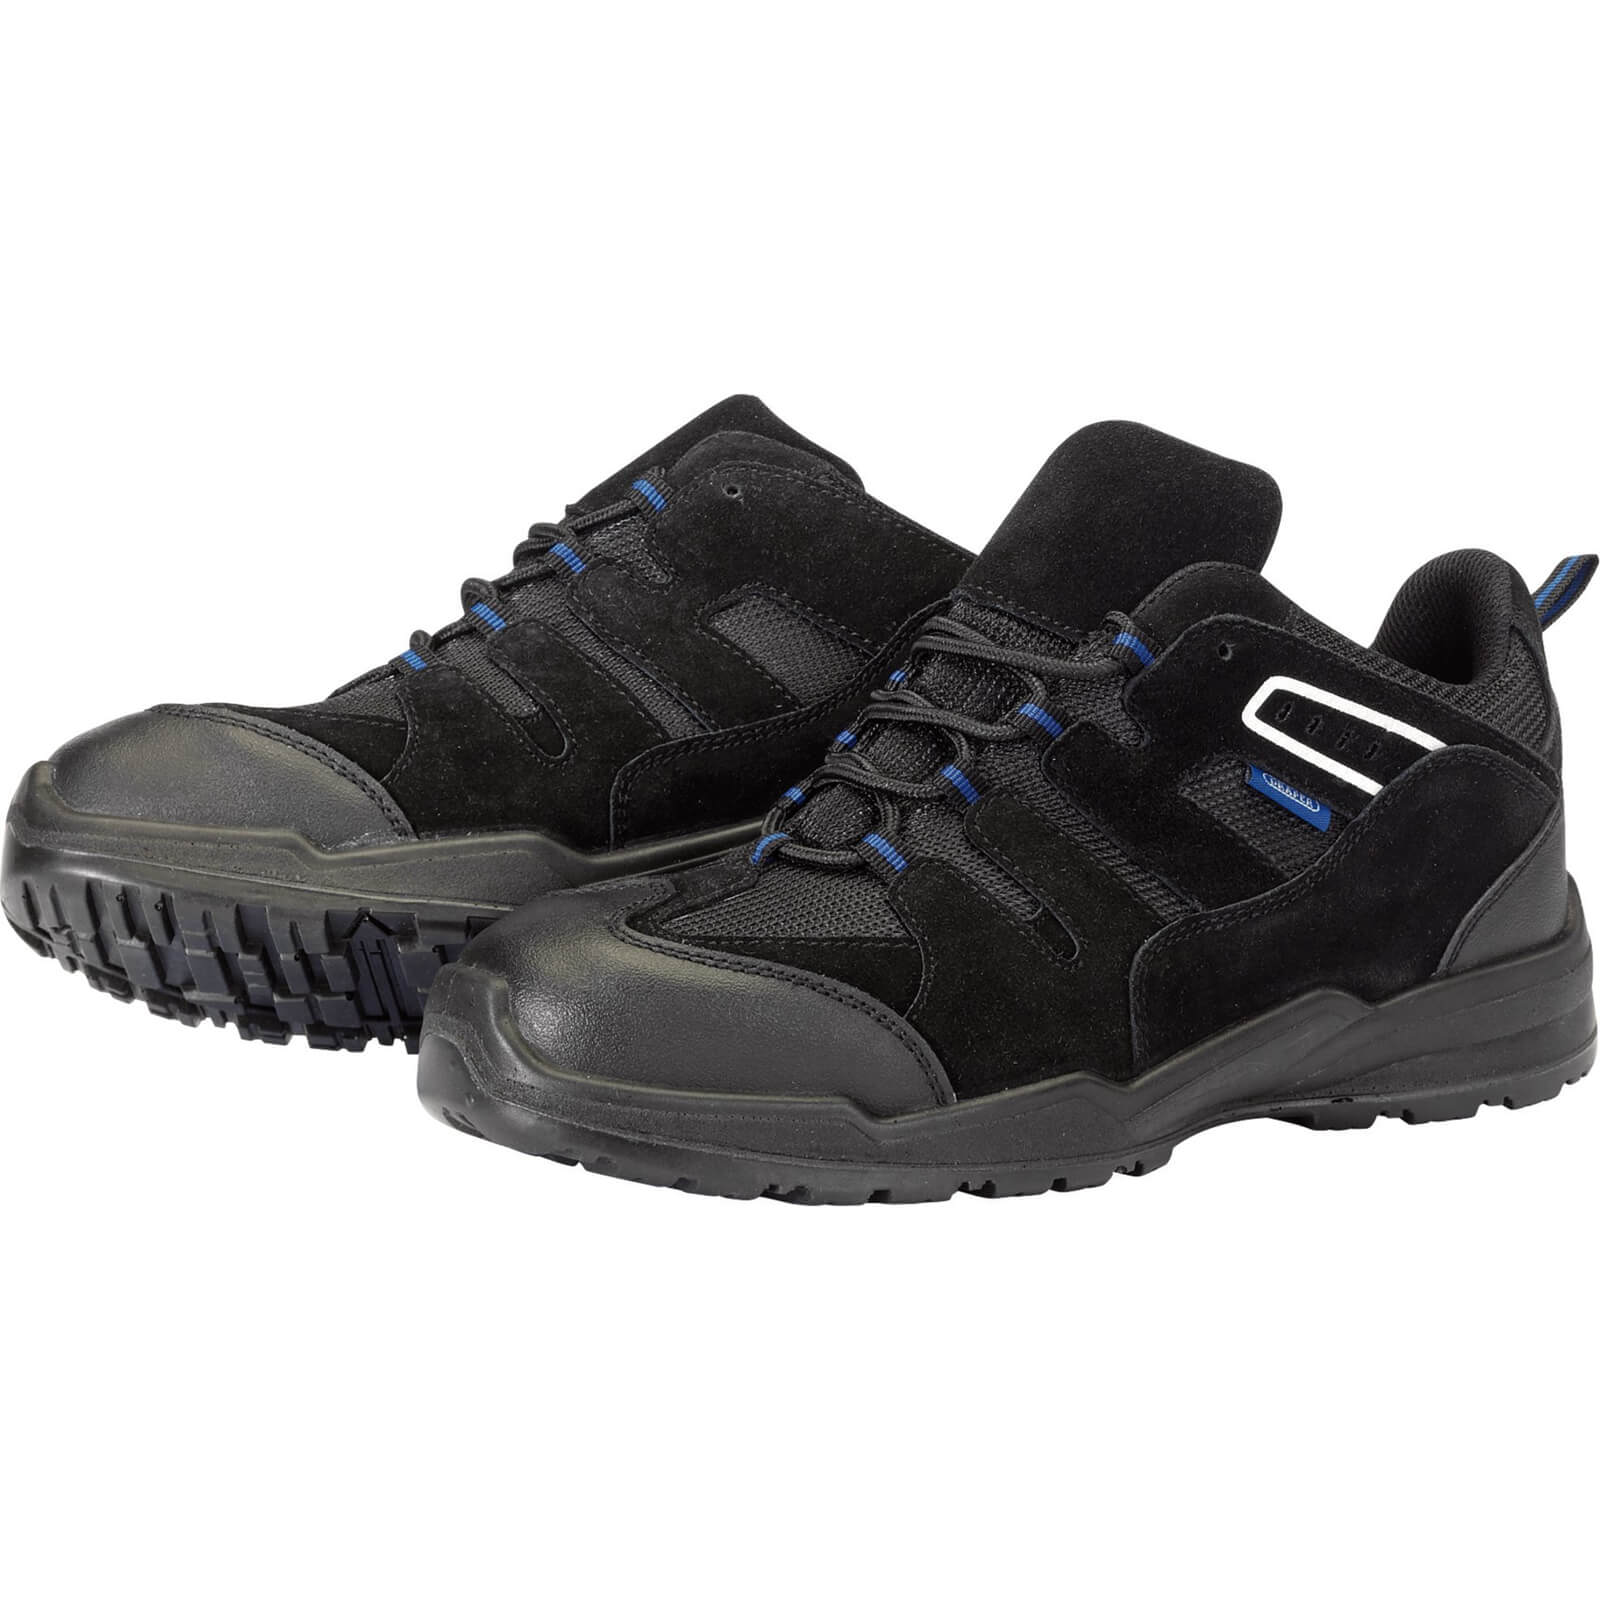 Image of Draper Trainer Style Safety Shoe Black Size 7